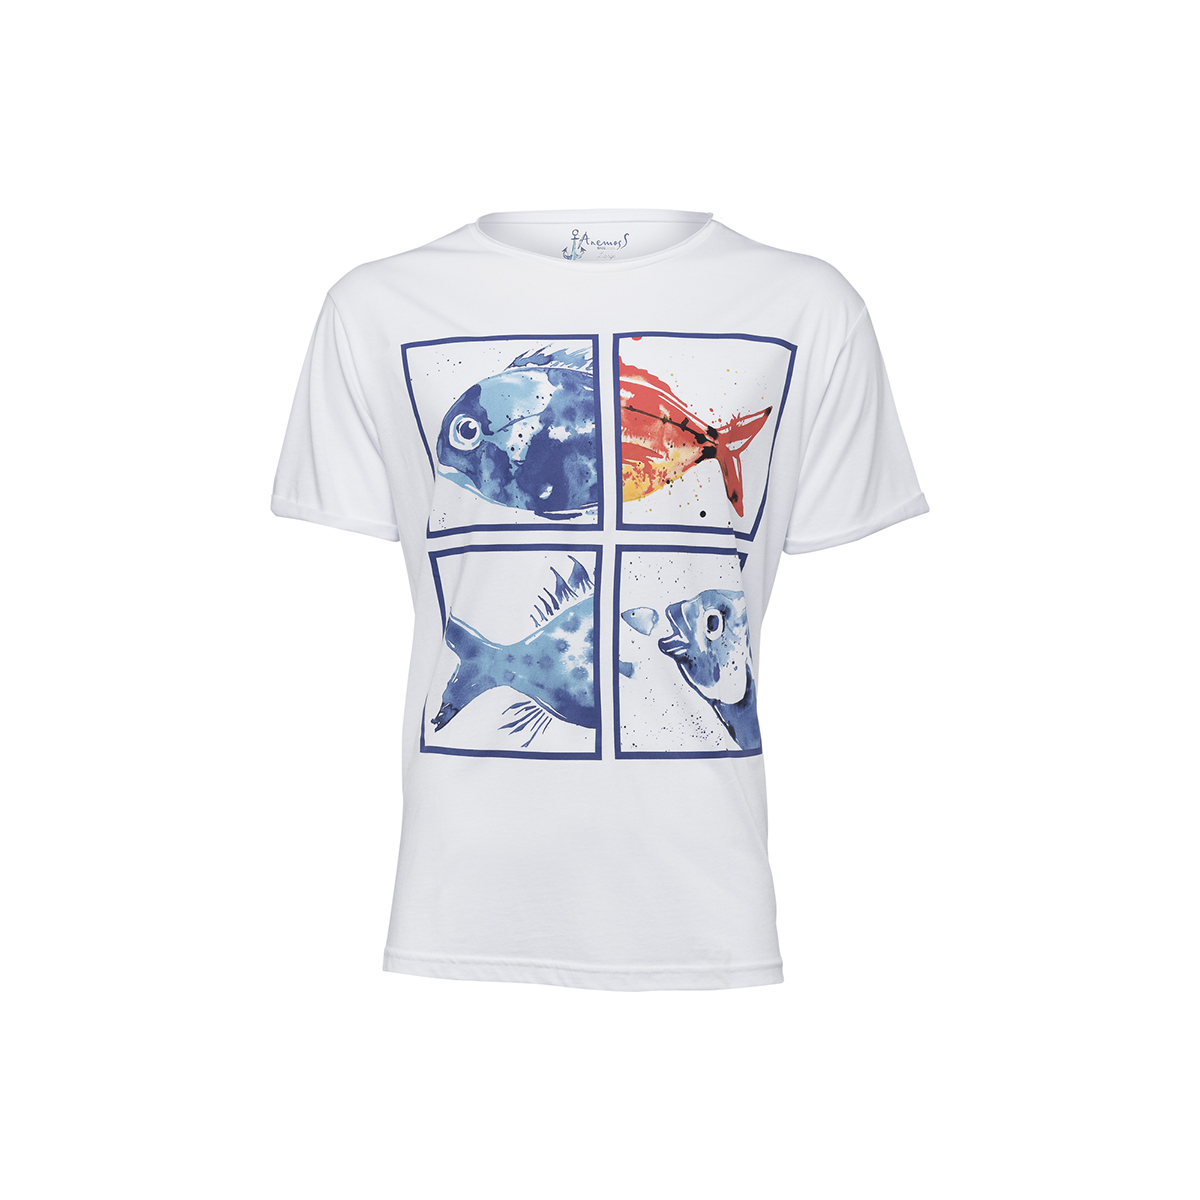 Anemoss Aquarium MenÃ¢â‚¬â„¢s T-shirts, Short Sleeve, Cotton, Crewneck, Mens T shirt, Ultra Soft, Modern Fit Shirts For Men